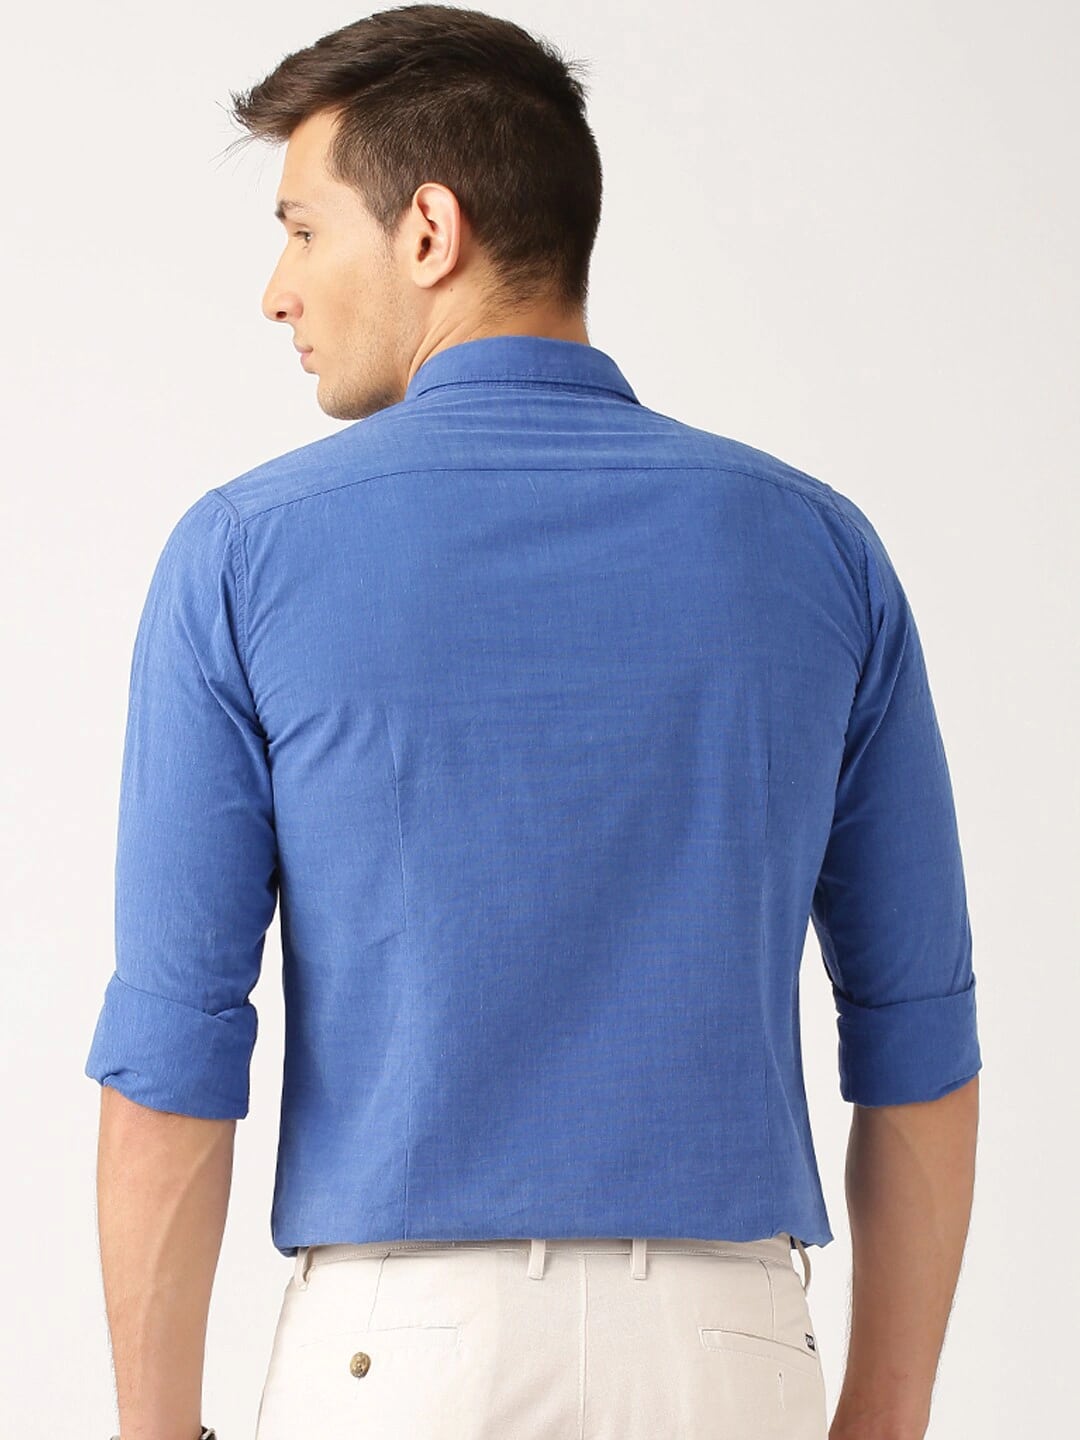 Men's Blue Formal Shirt